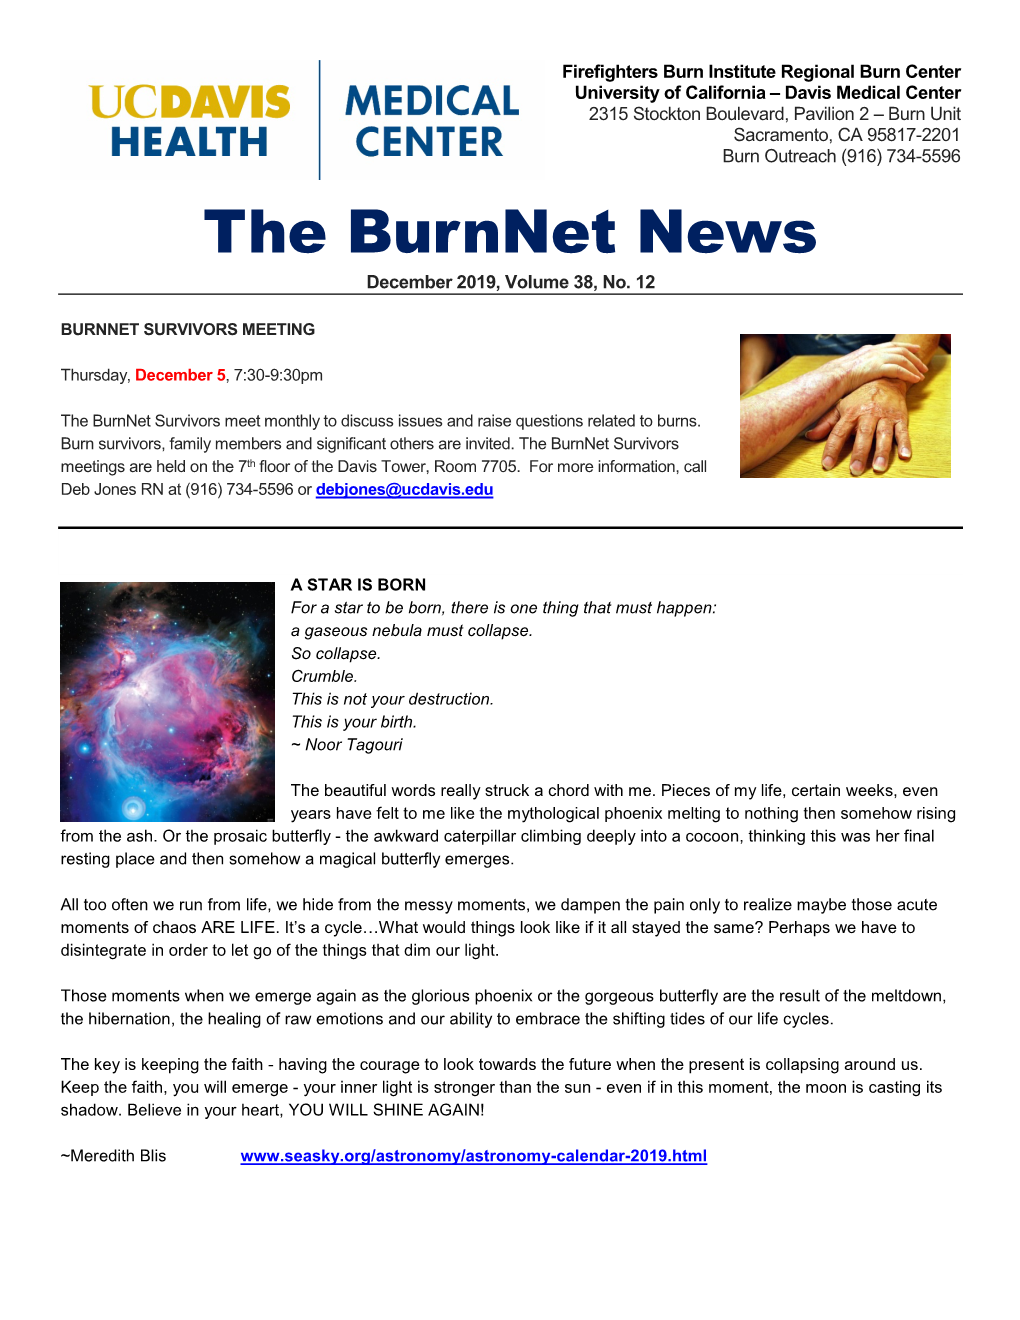 The Burnnet News December 2019, Volume 38, No